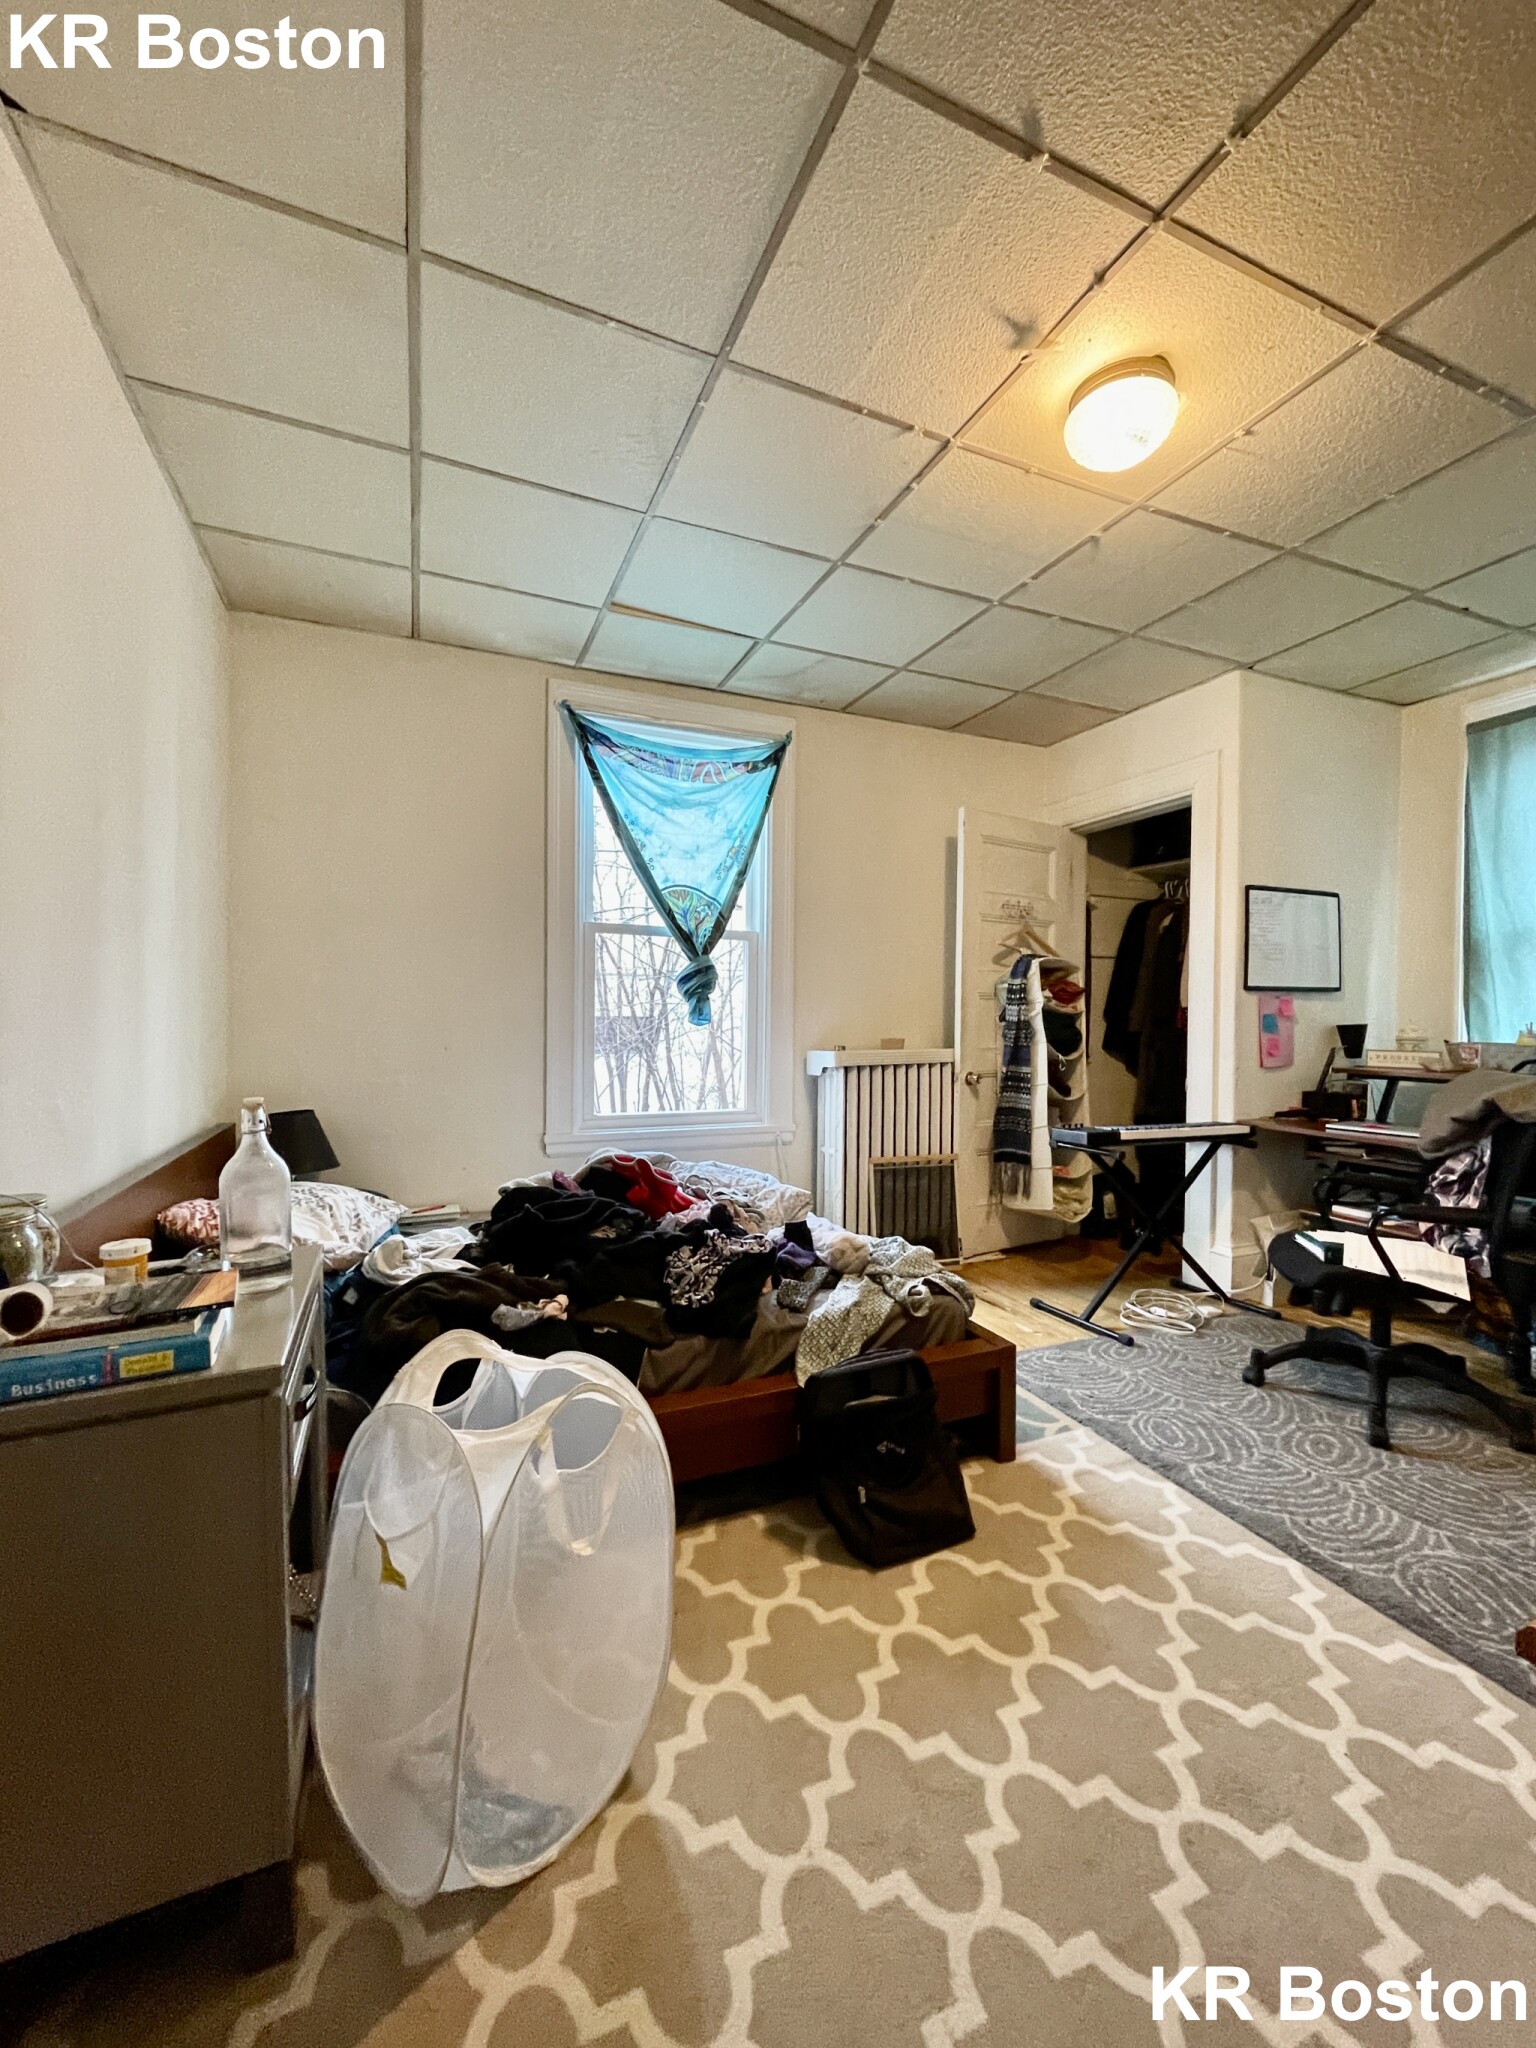 Photos of apartment on Imrie Rd.,Boston MA 02134